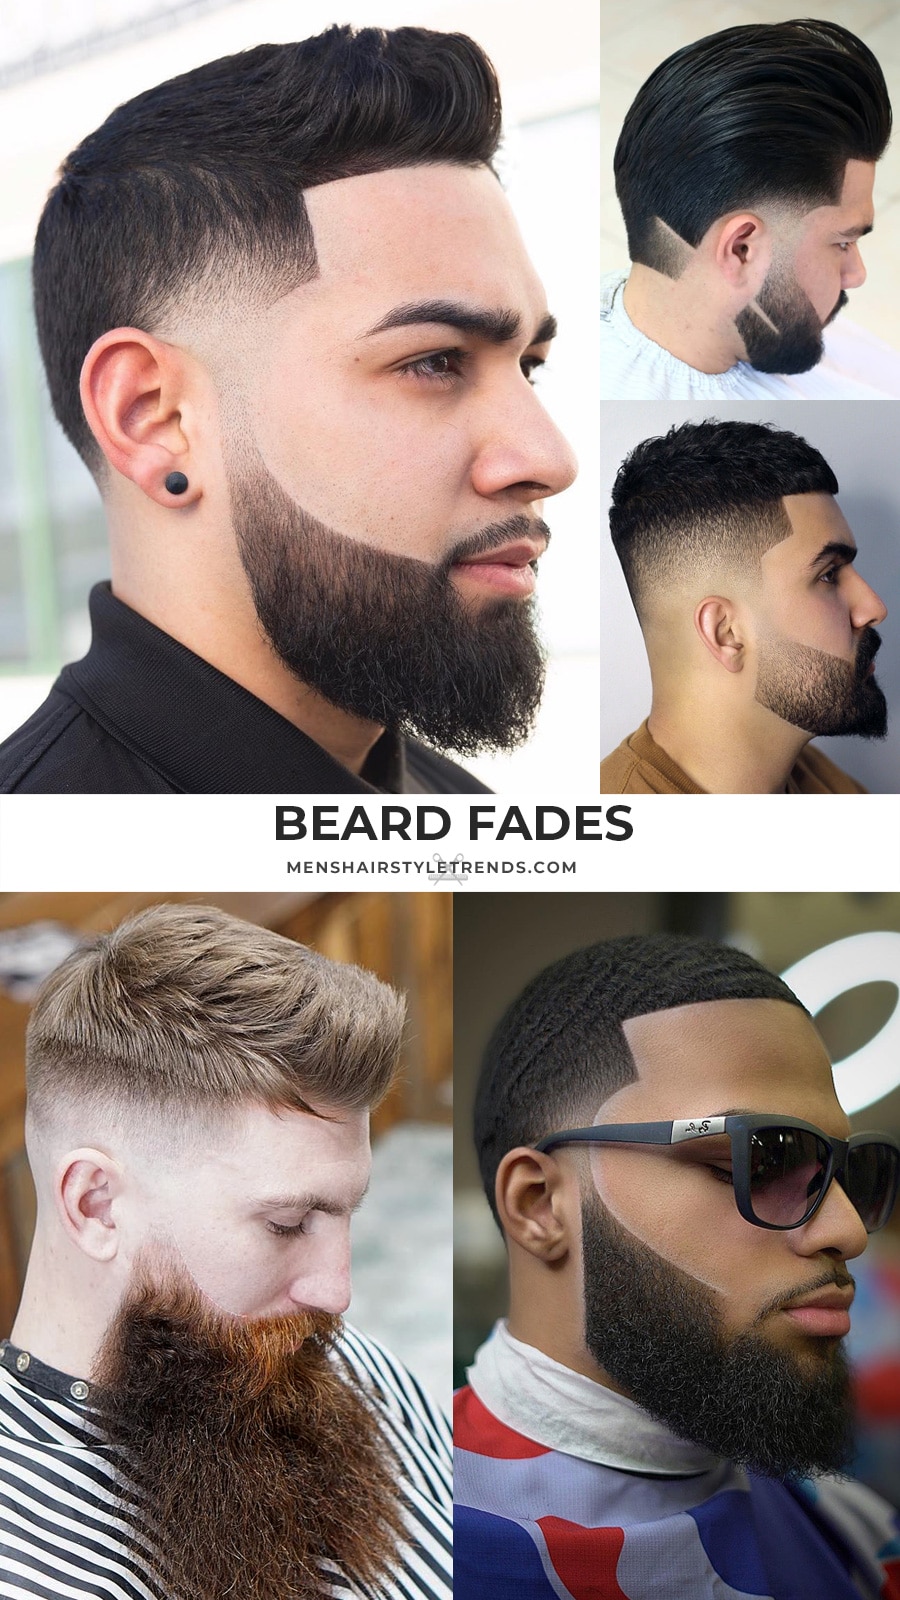 Beard fade styles